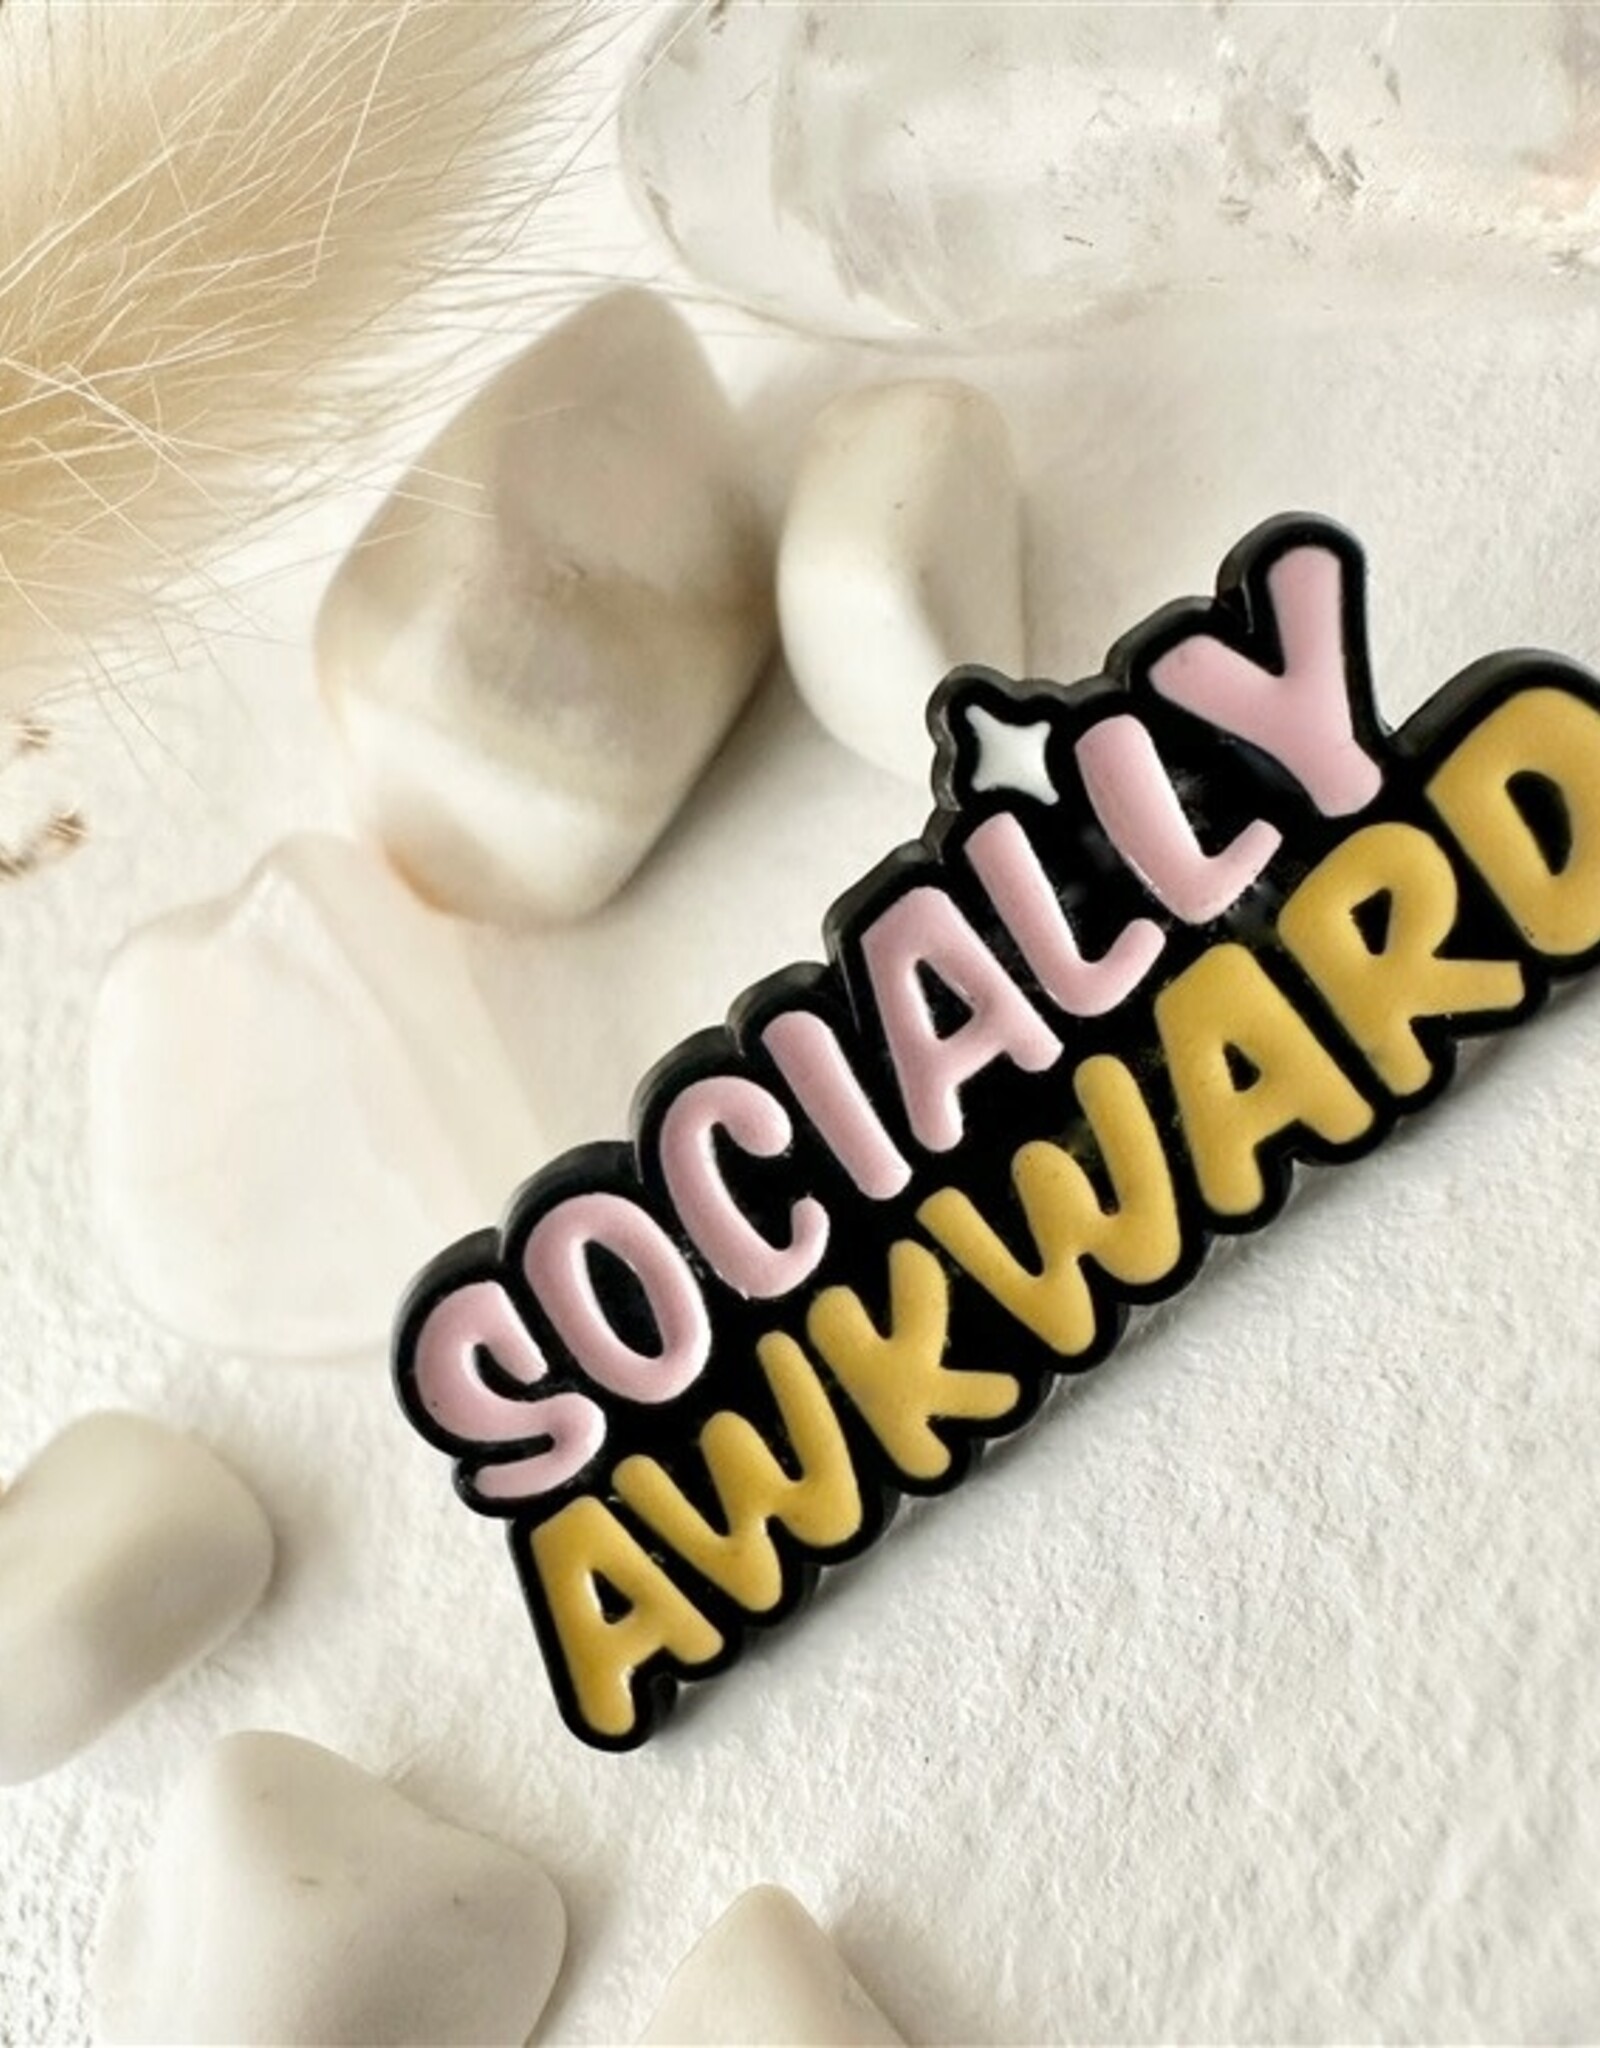 "Socially Awkward" Enamel Pin